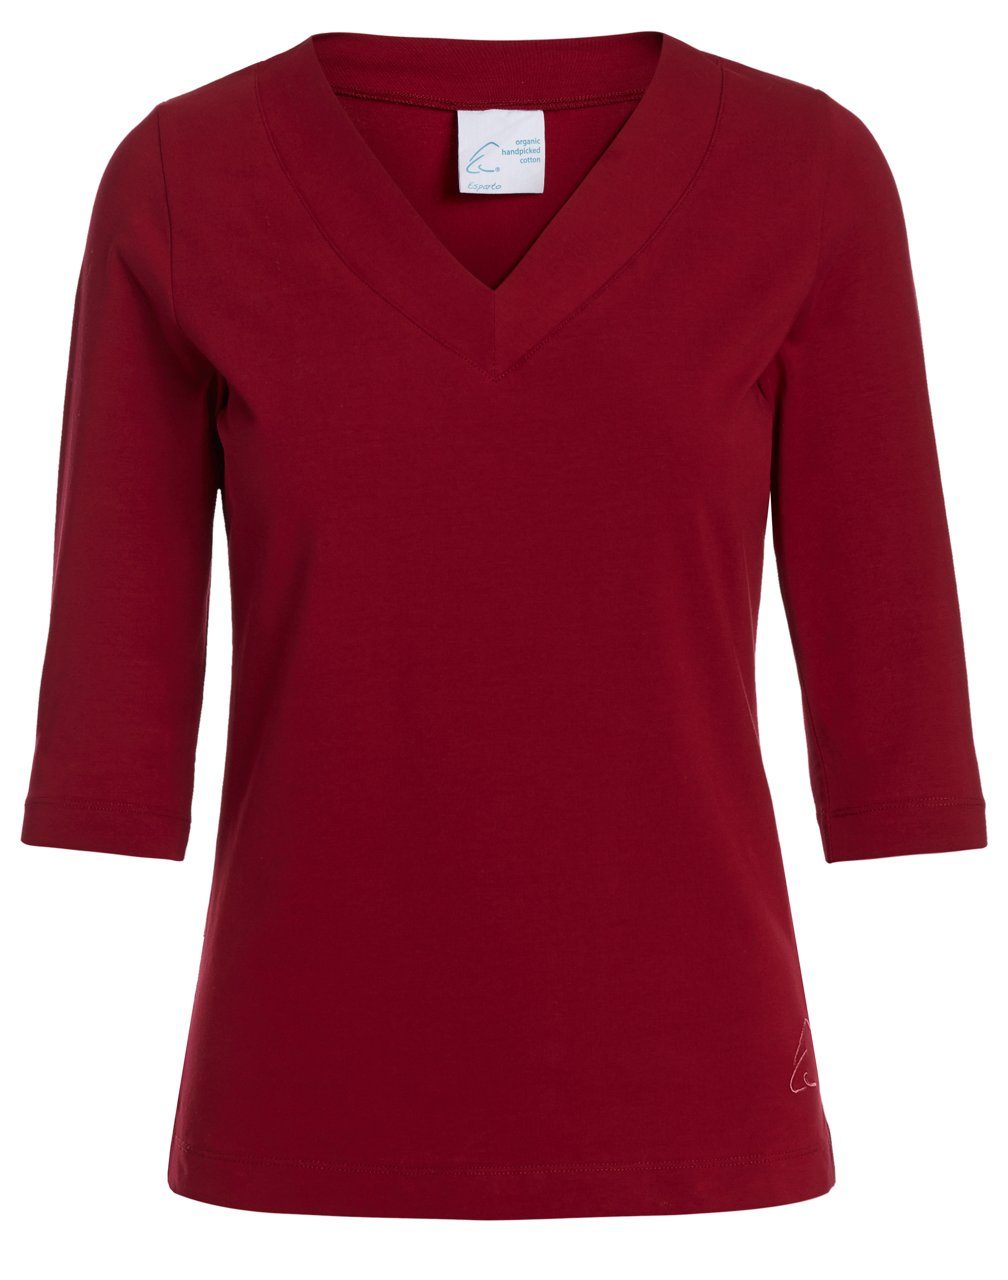 ESPARTO Yogatop Damen-Shirt Sundar in Bio-Baumwolle lang geschnitten und leicht geschlitzt, 2/3 Ärmel, V-Ausschnitt Granatrot | Sporttops